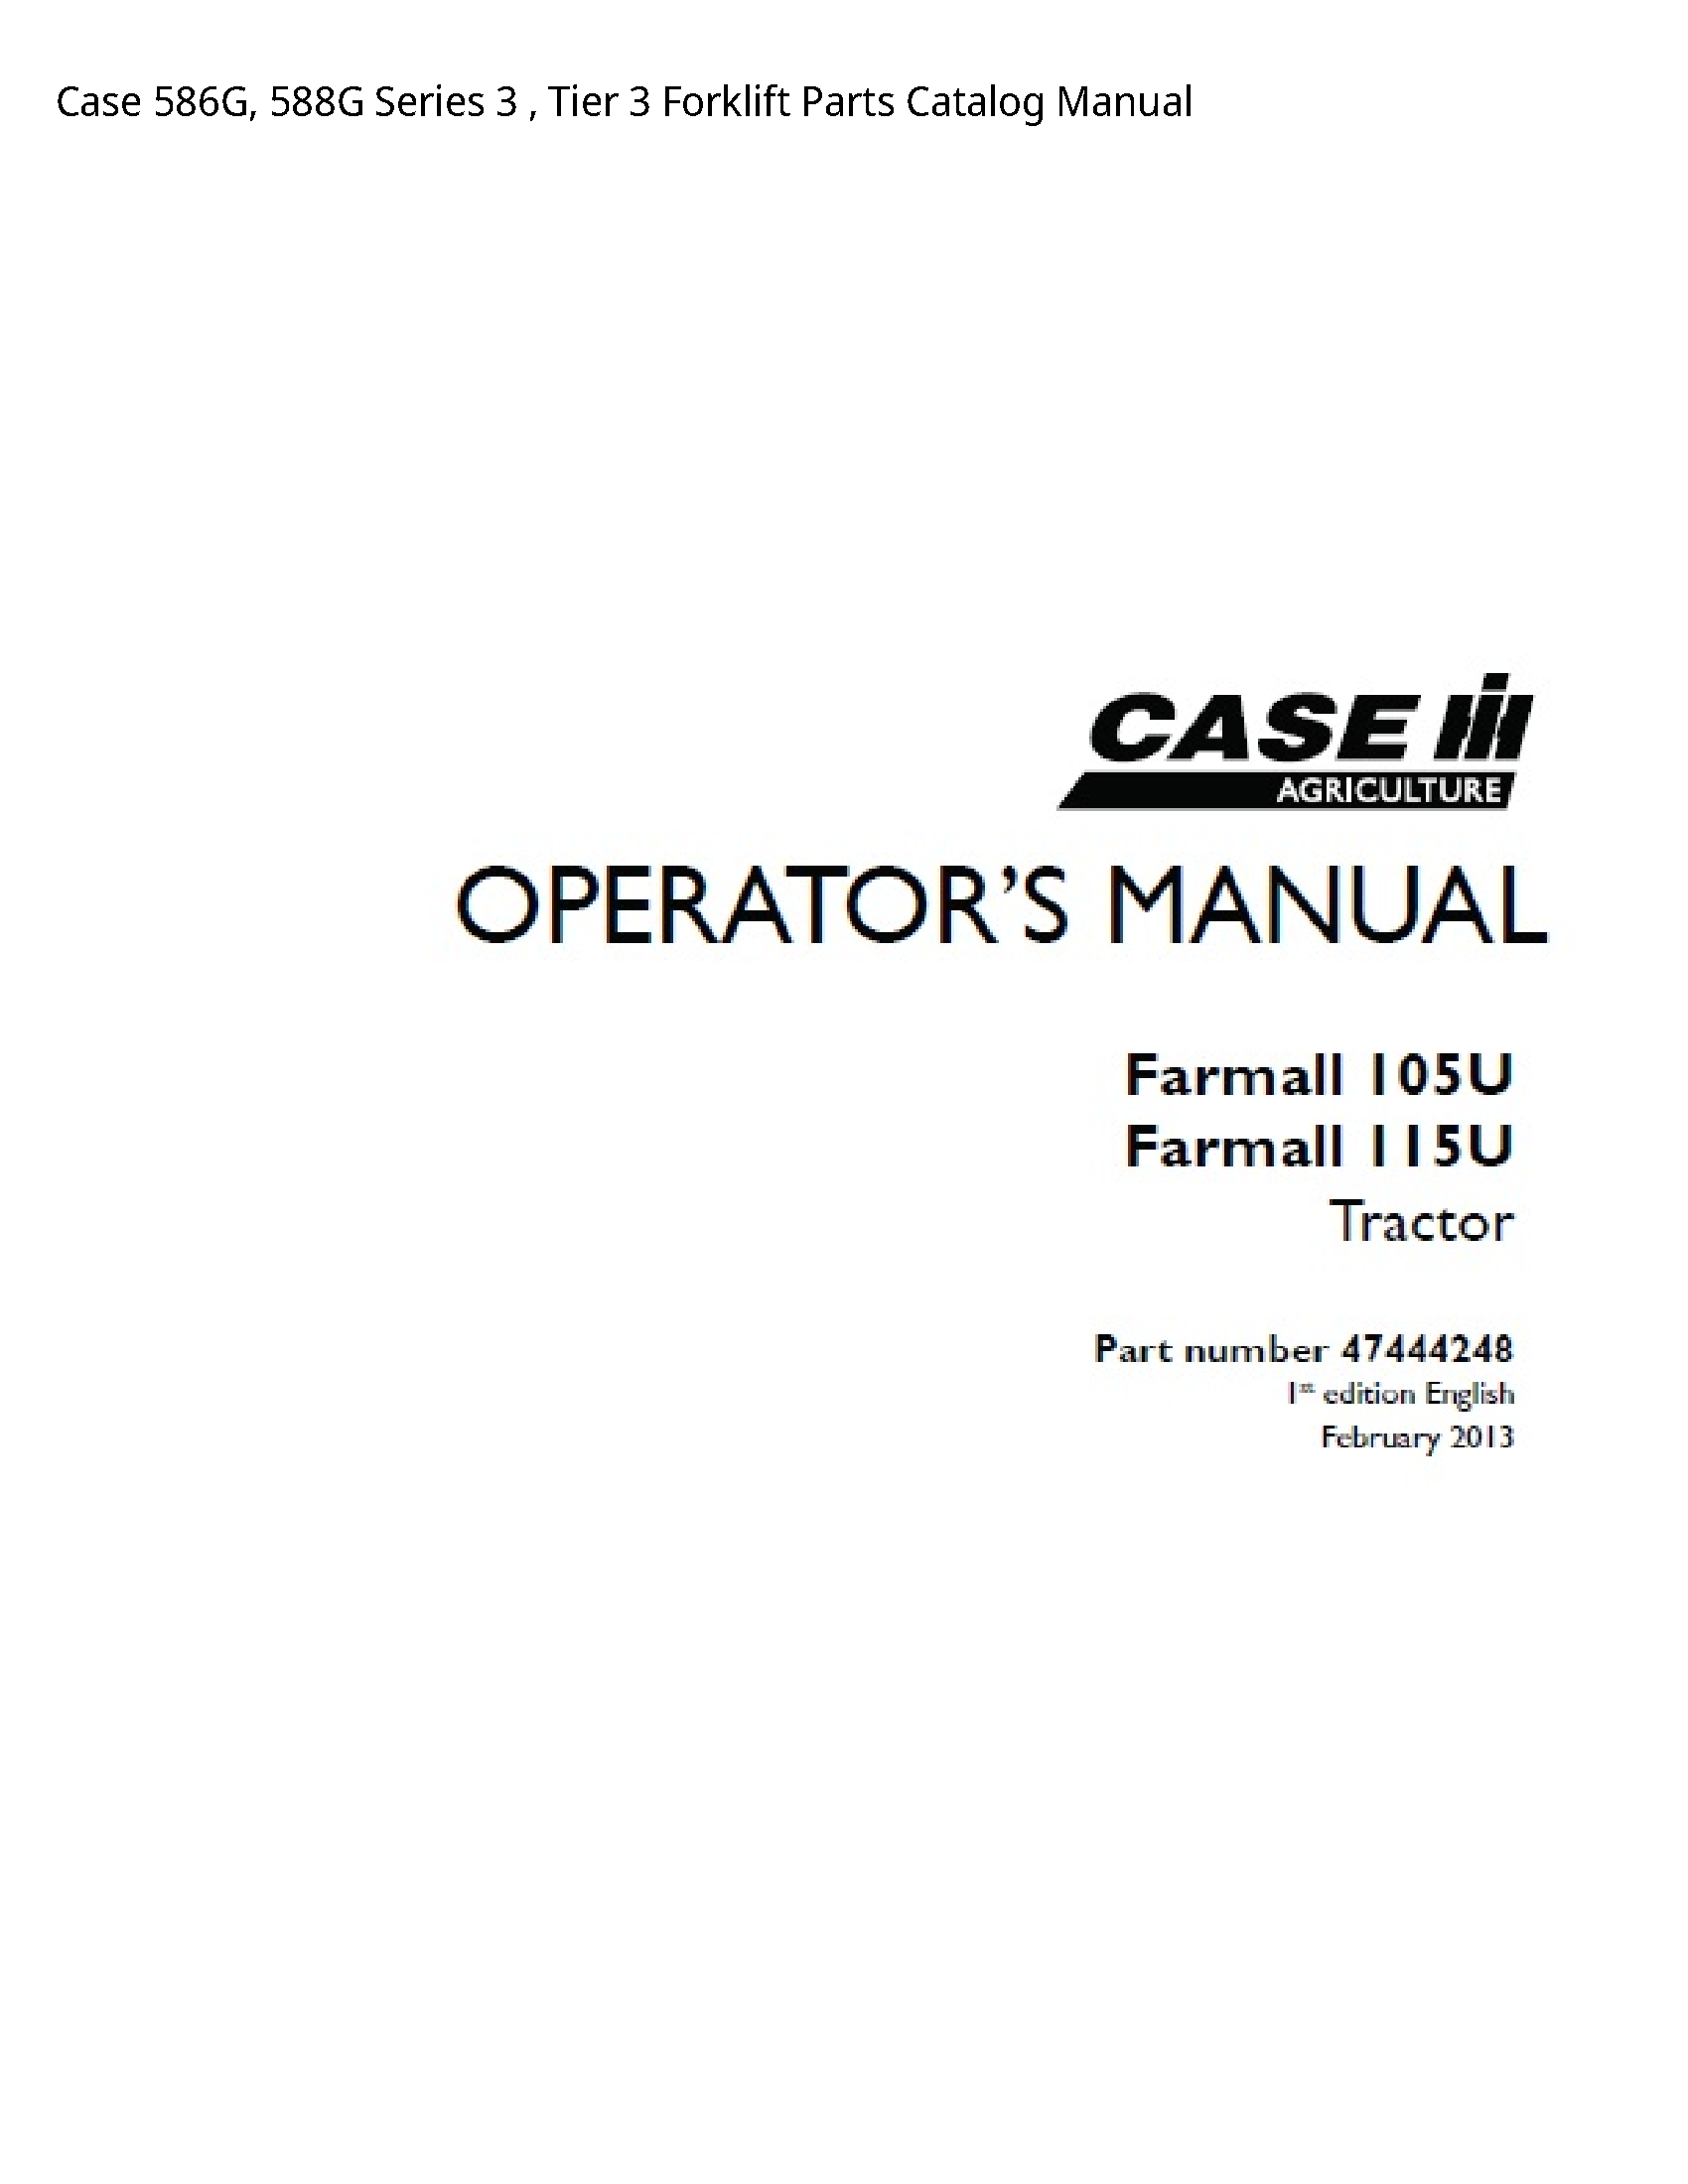 Case/Case IH 586G Series Tier Forklift Parts Catalog manual